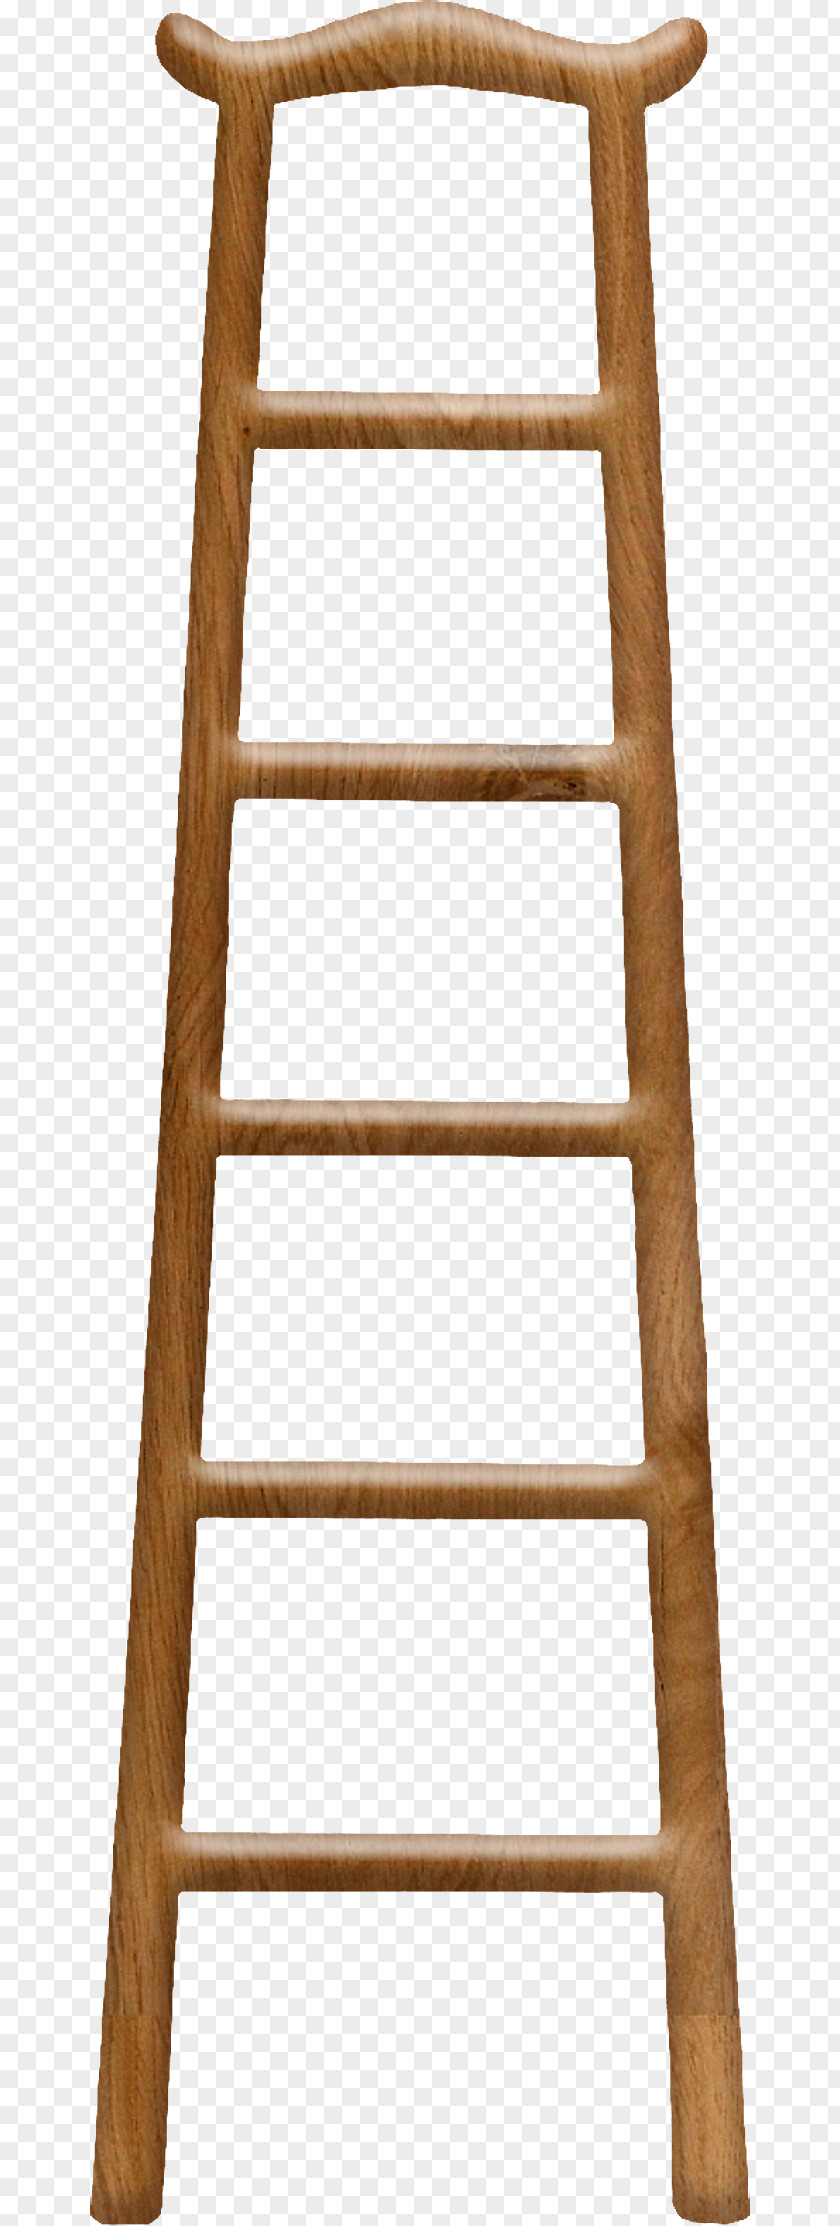 Cartoon Ladder Wood PNG